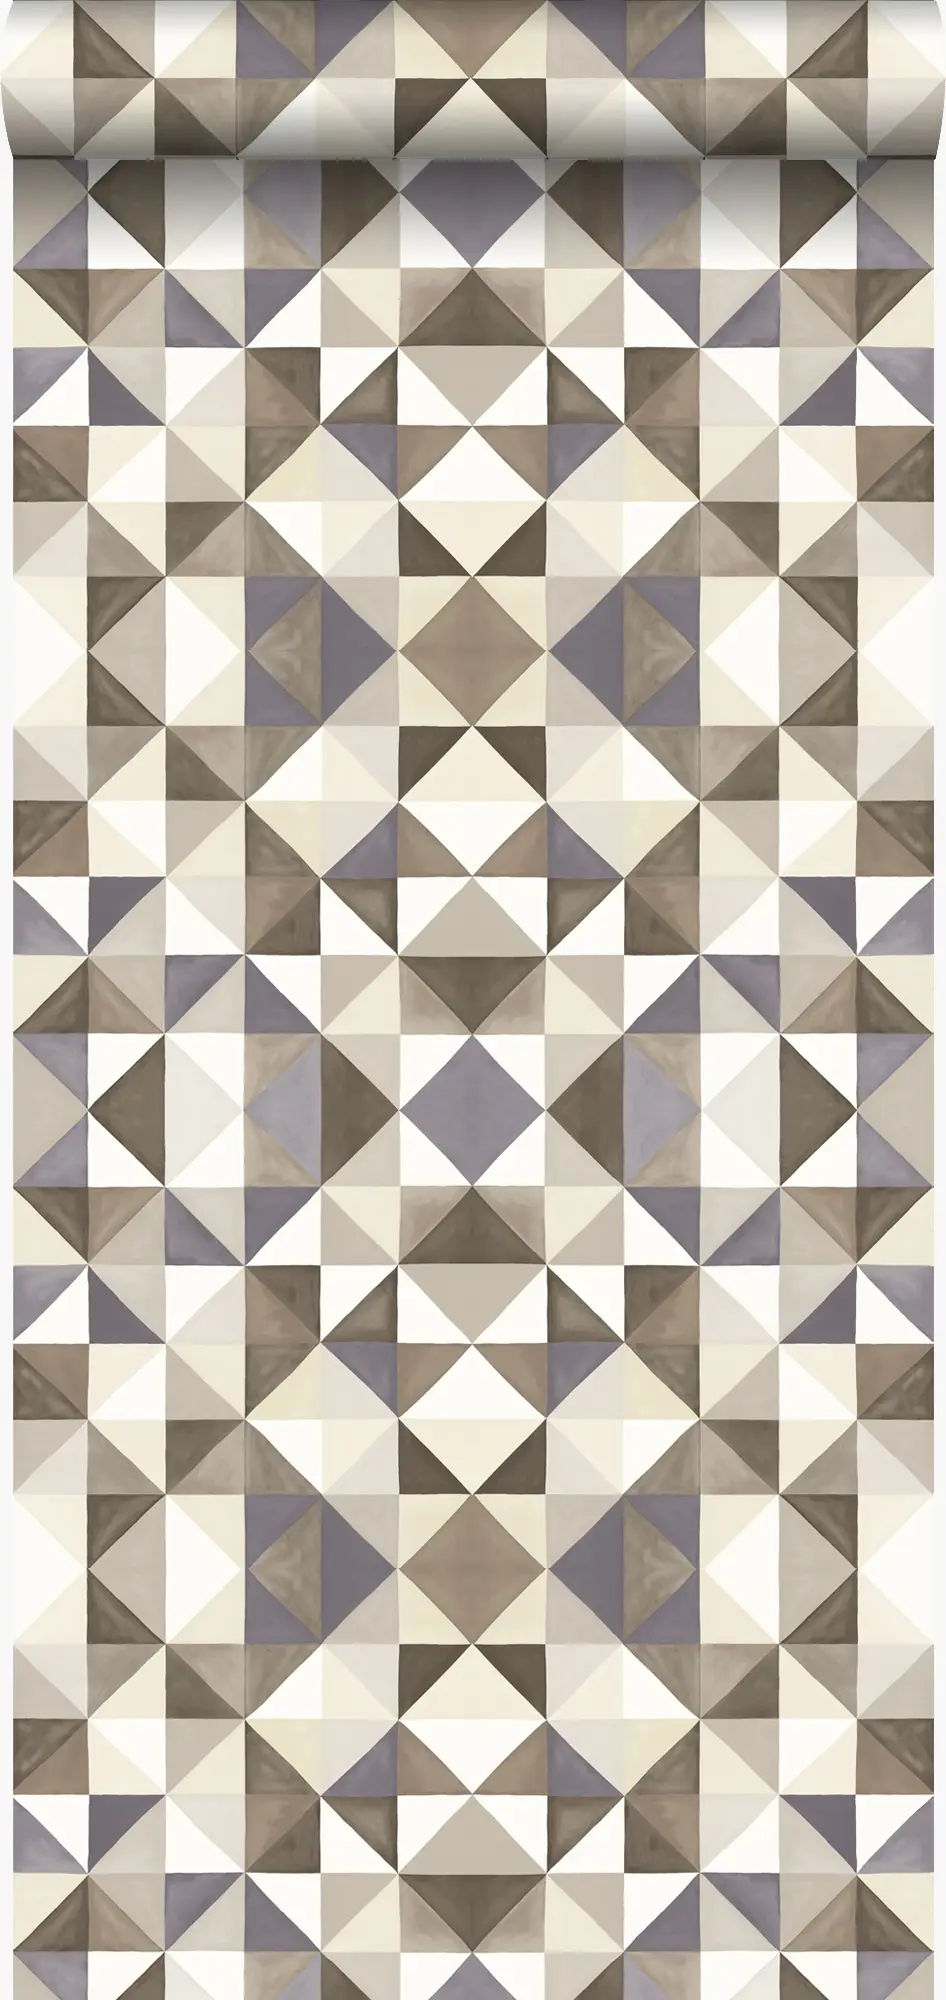 Tapete kubistisches Muster